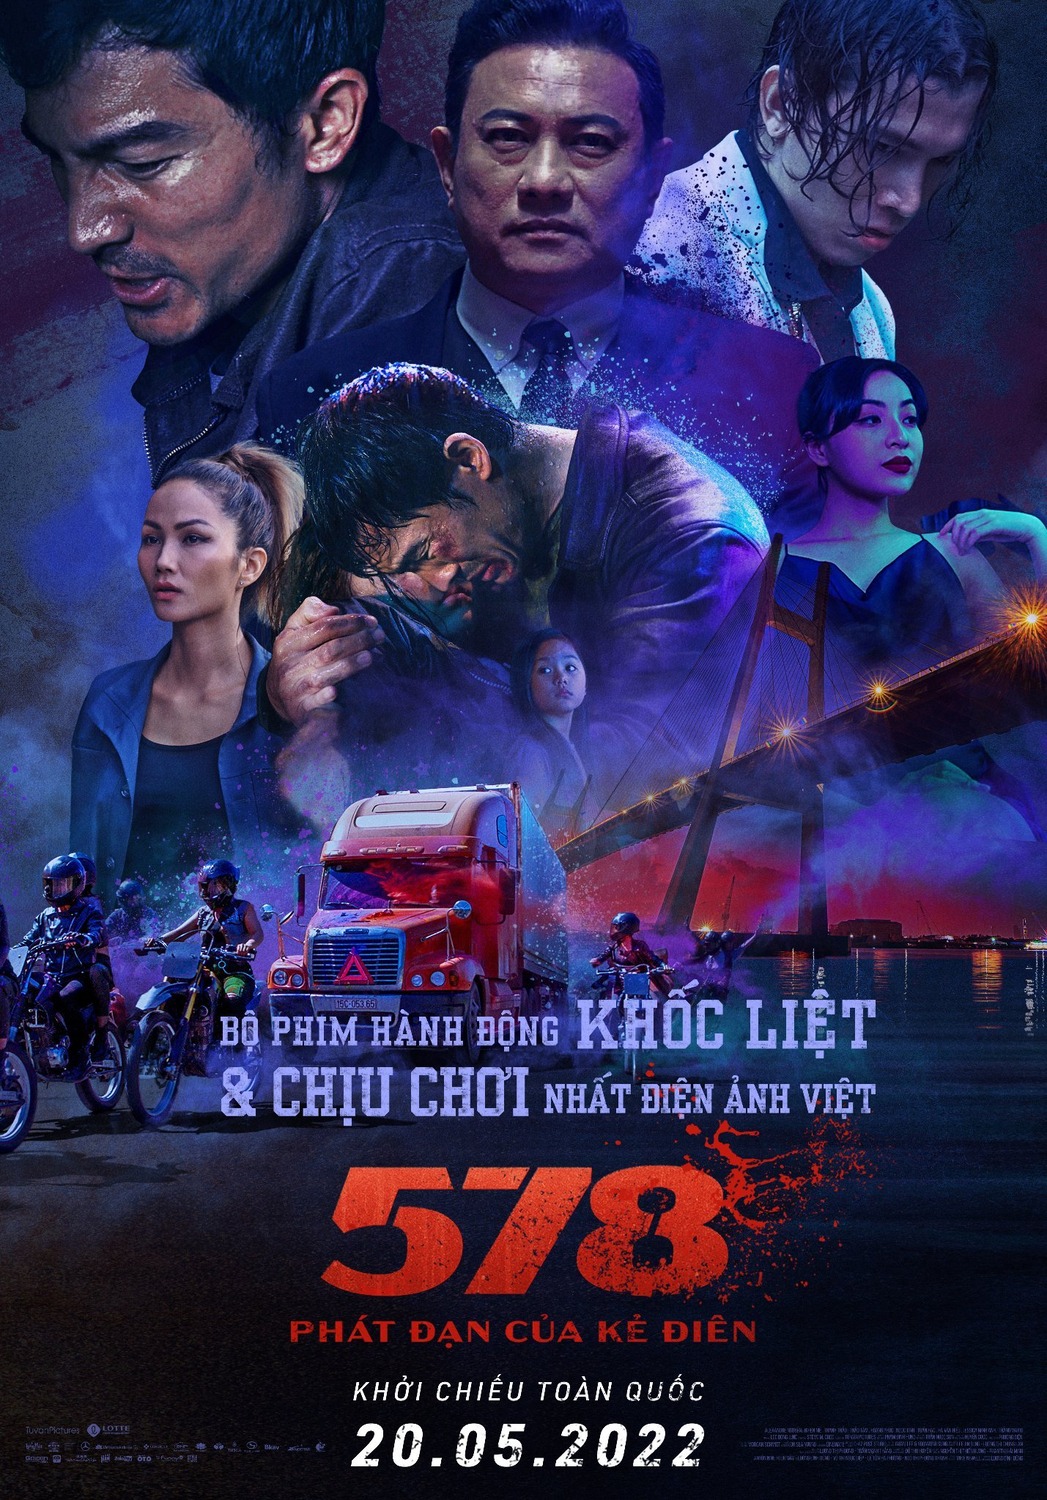 Extra Large Movie Poster Image for 578: Phat dan cua ke dien (#1 of 2)